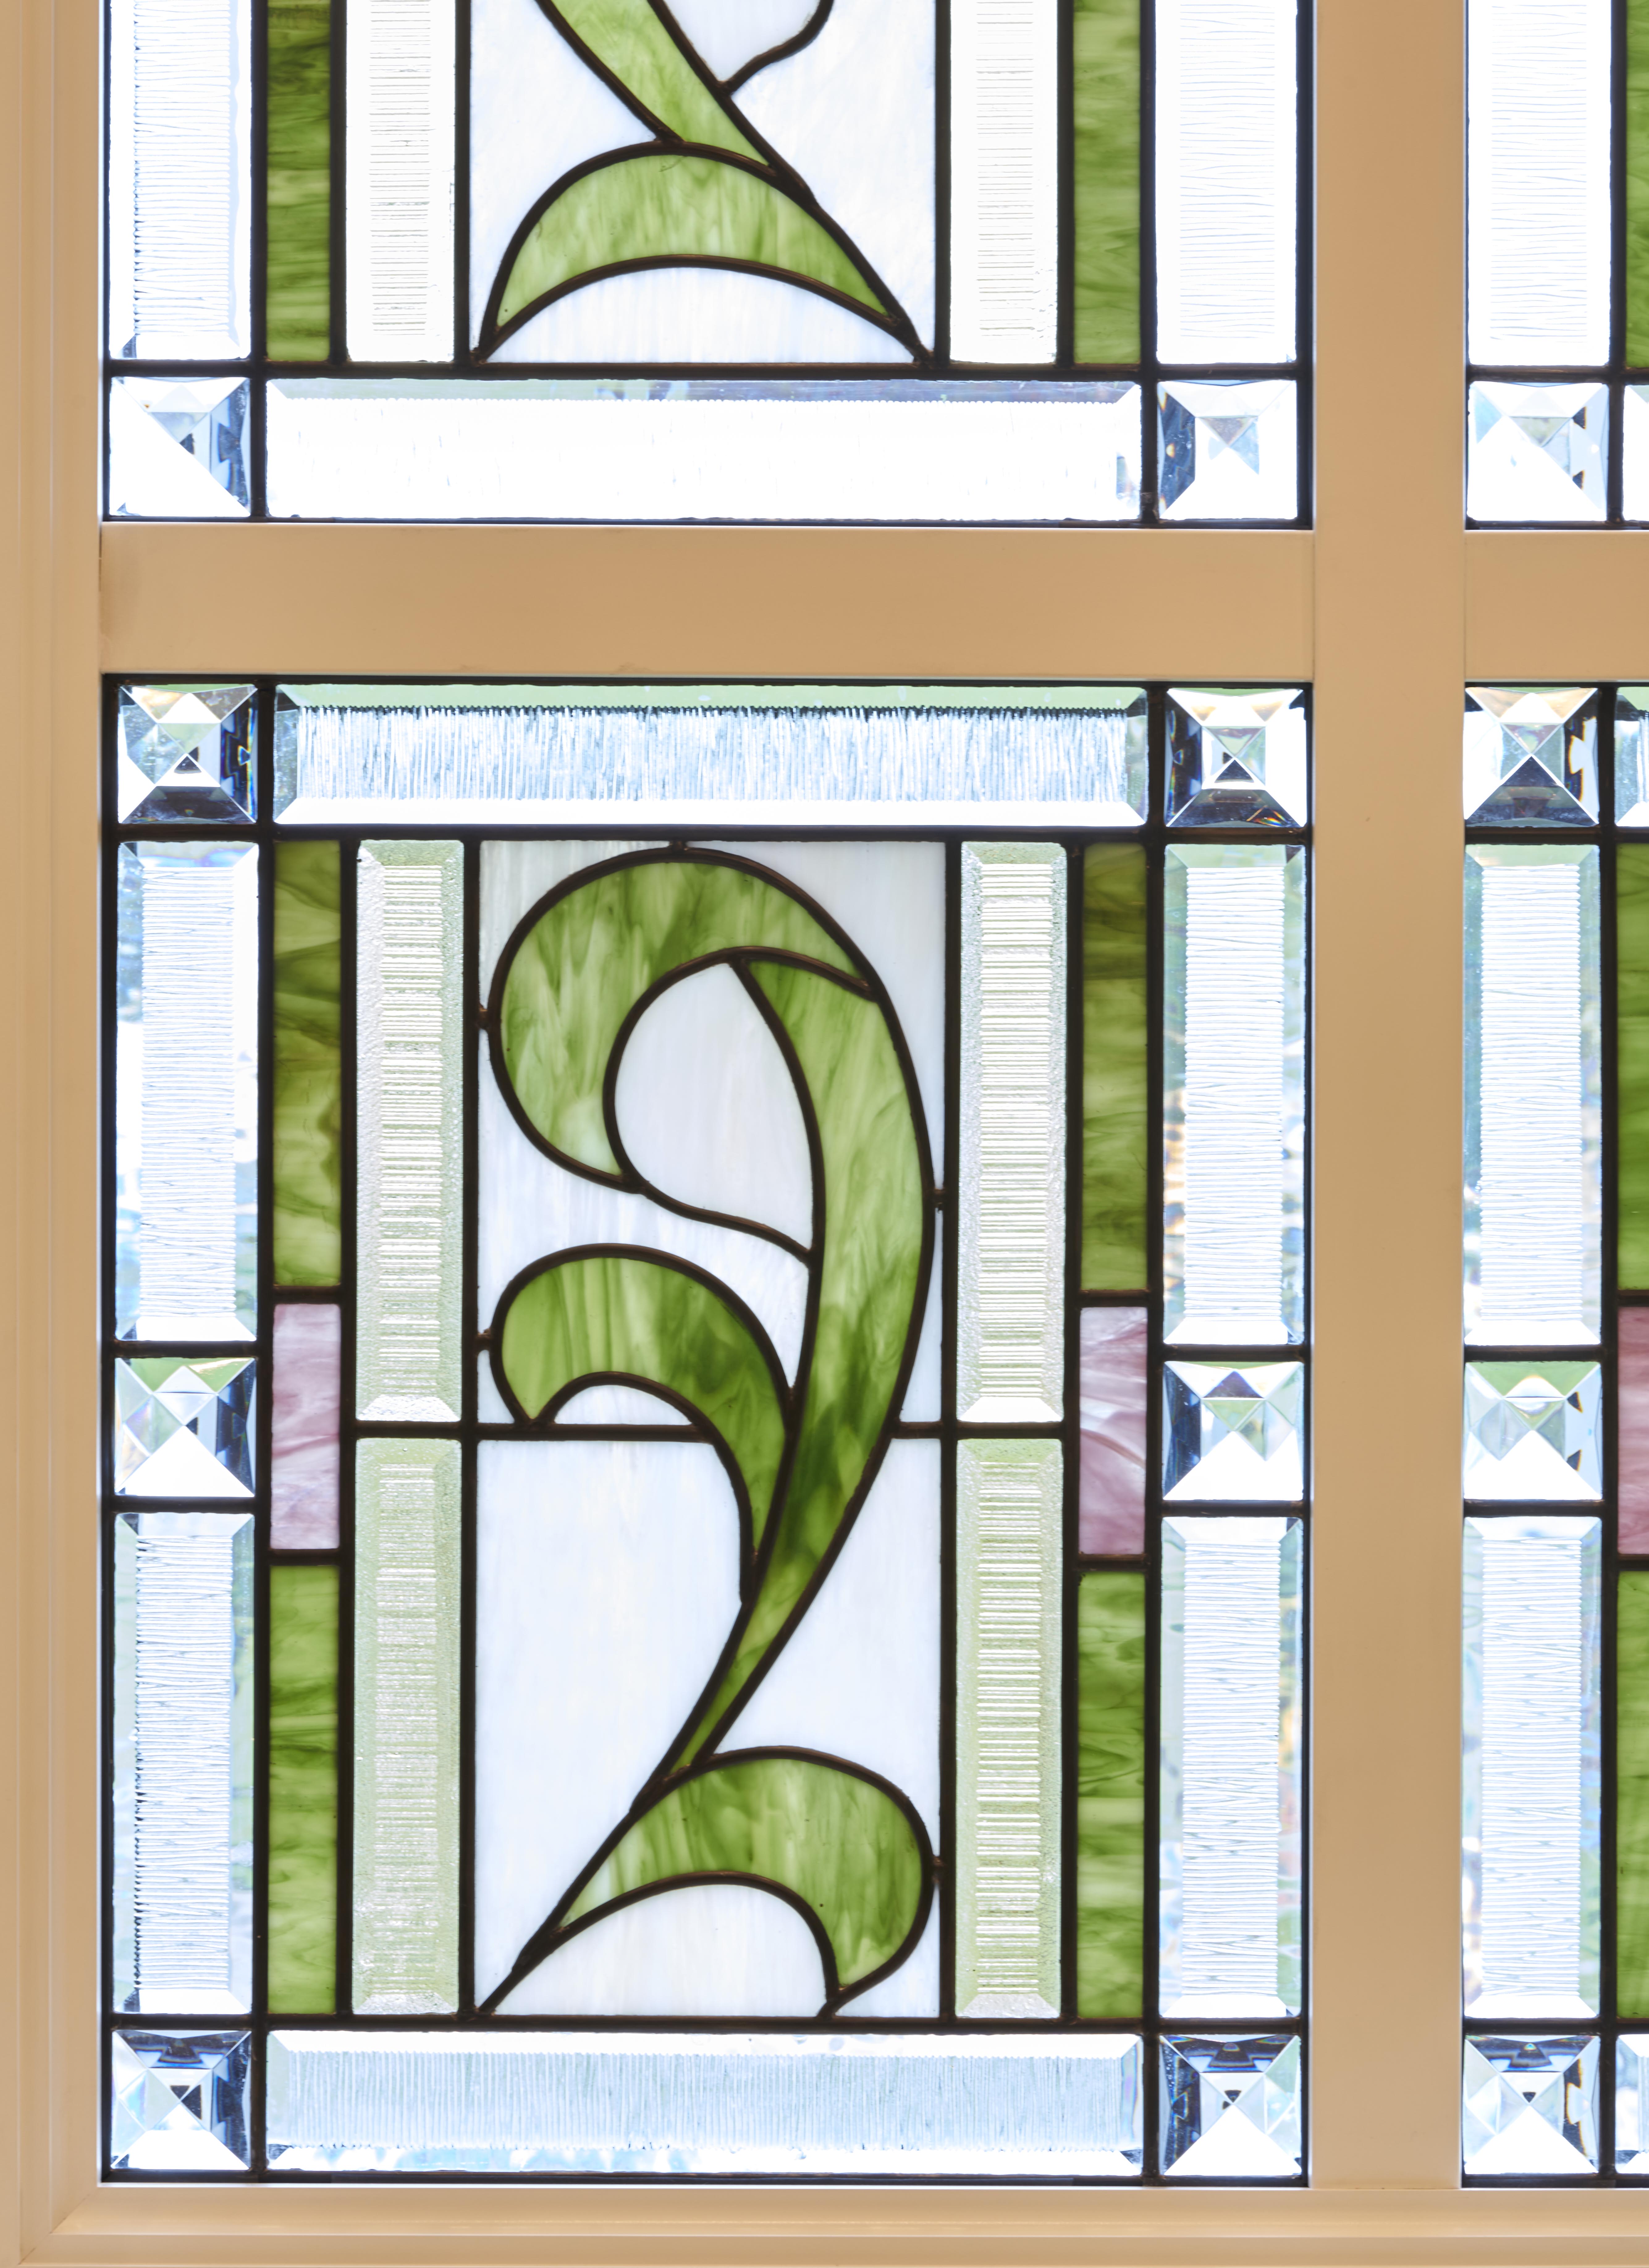 Glass art depicting a green vine.